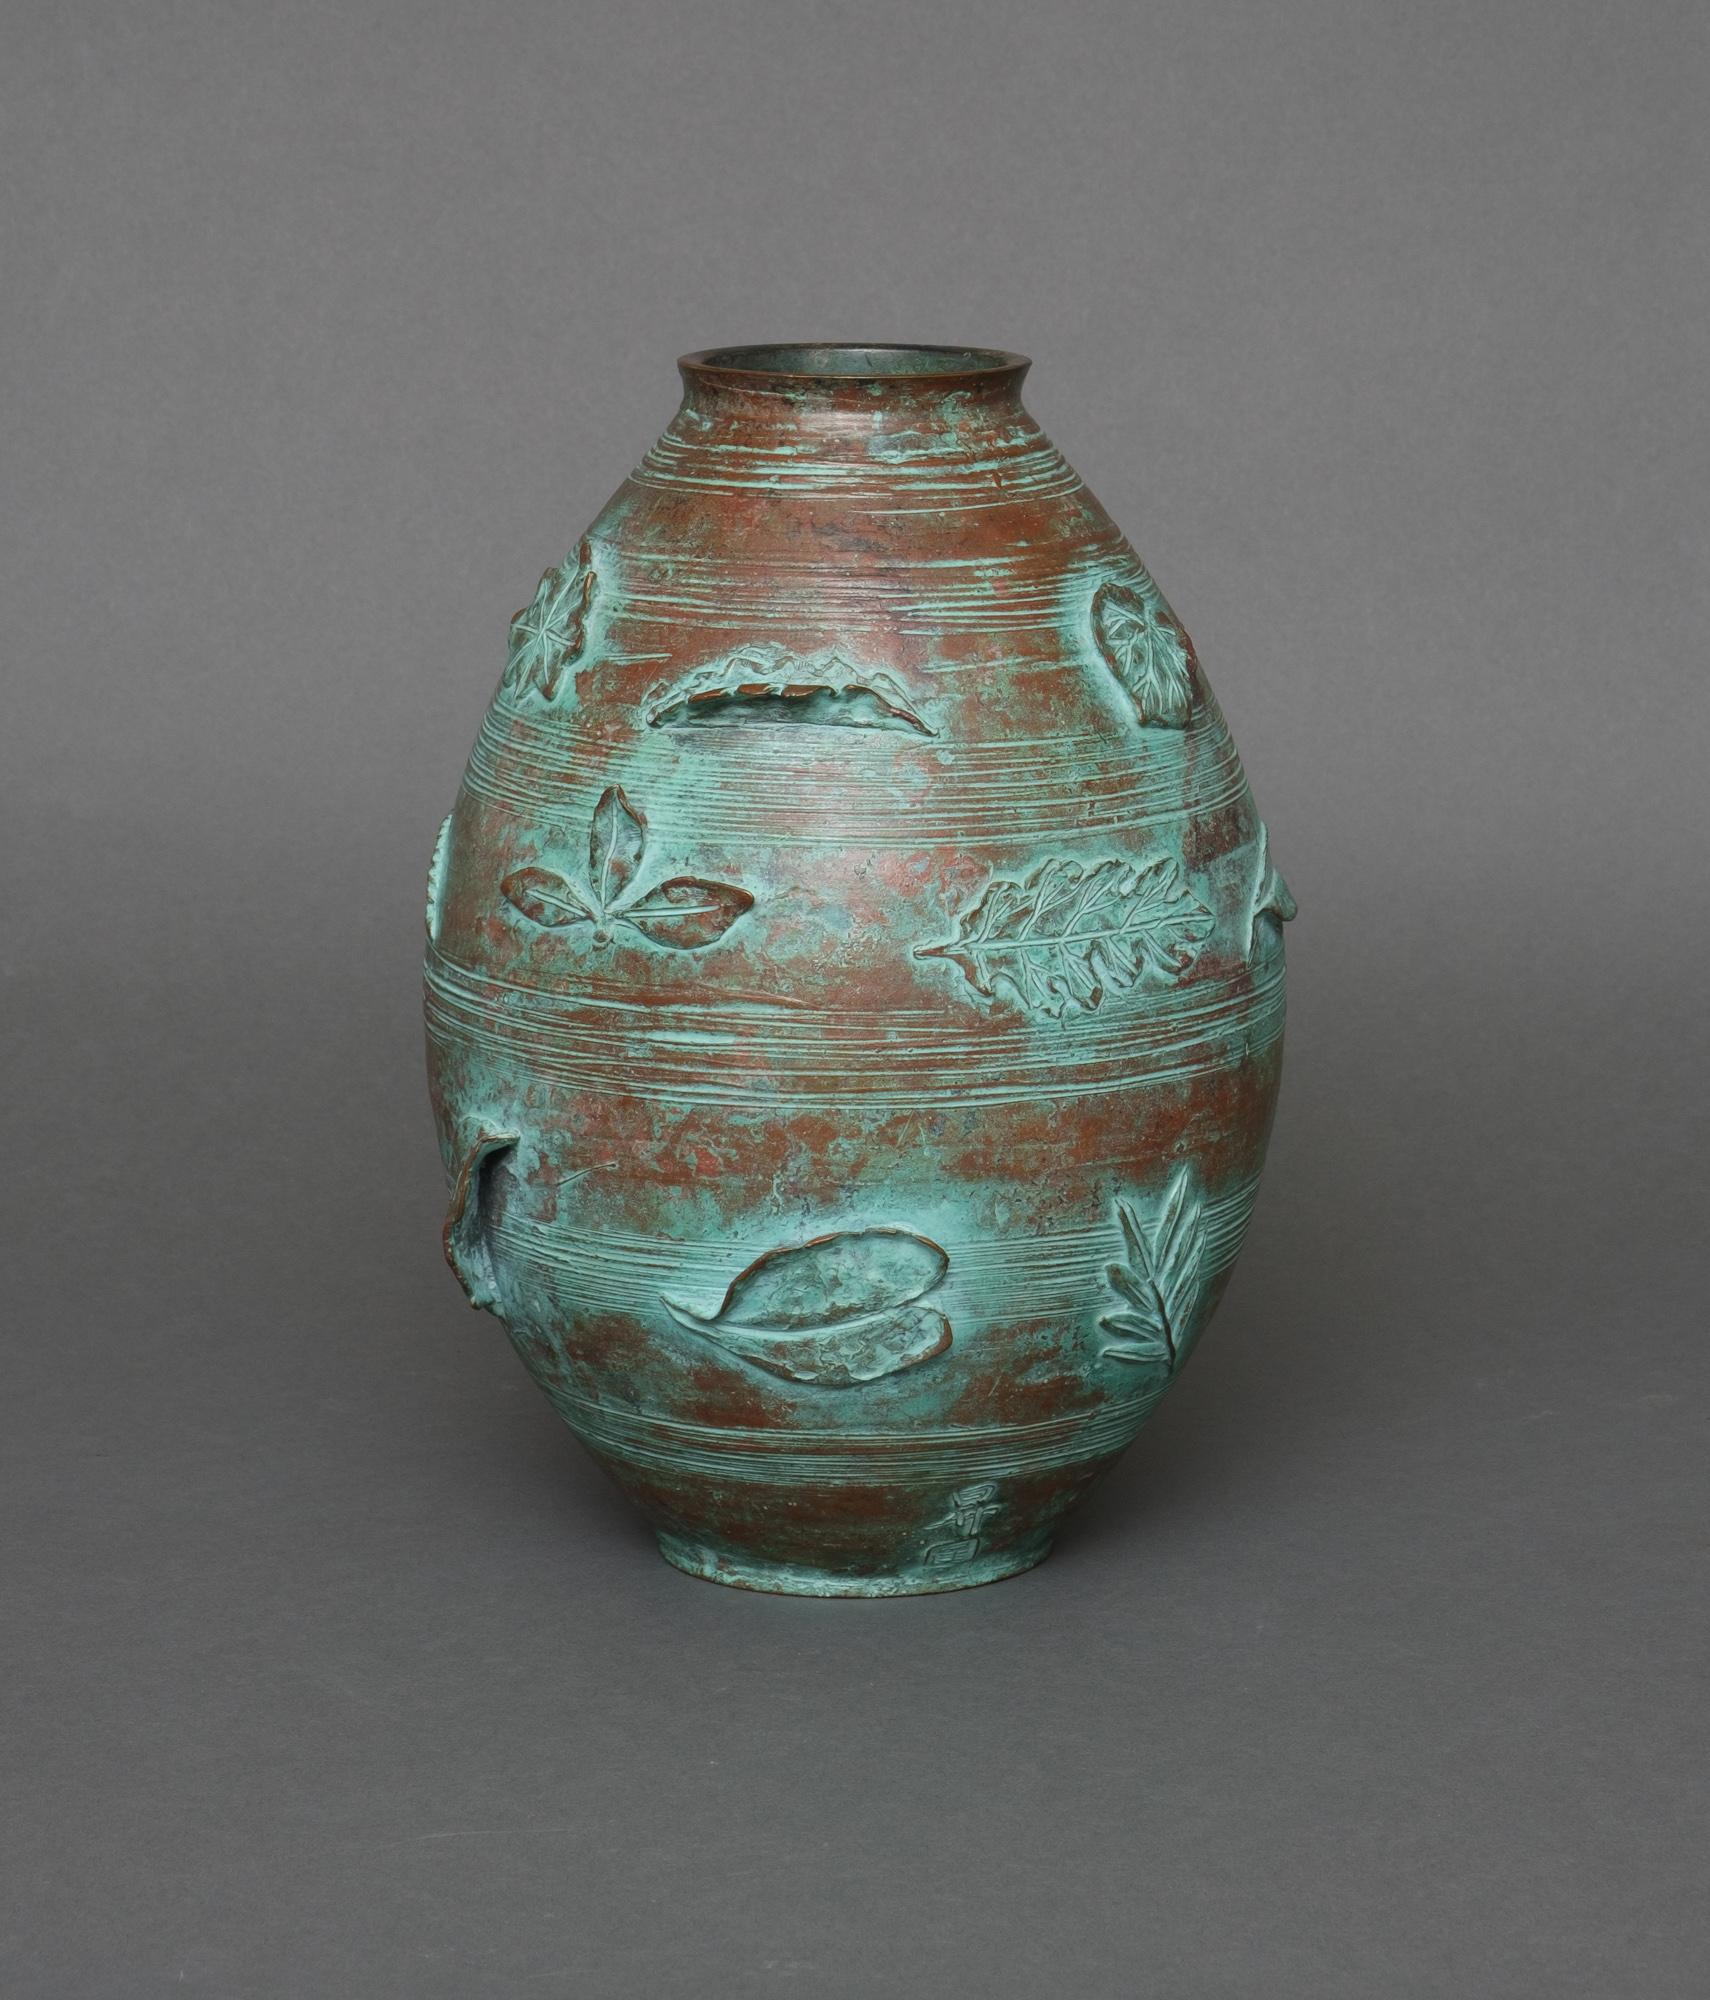 Japanese Bronze Ovoid Vase with High Relief Leaf Design by Nitten Artist Hirai Noboru 平井昇 For Sale